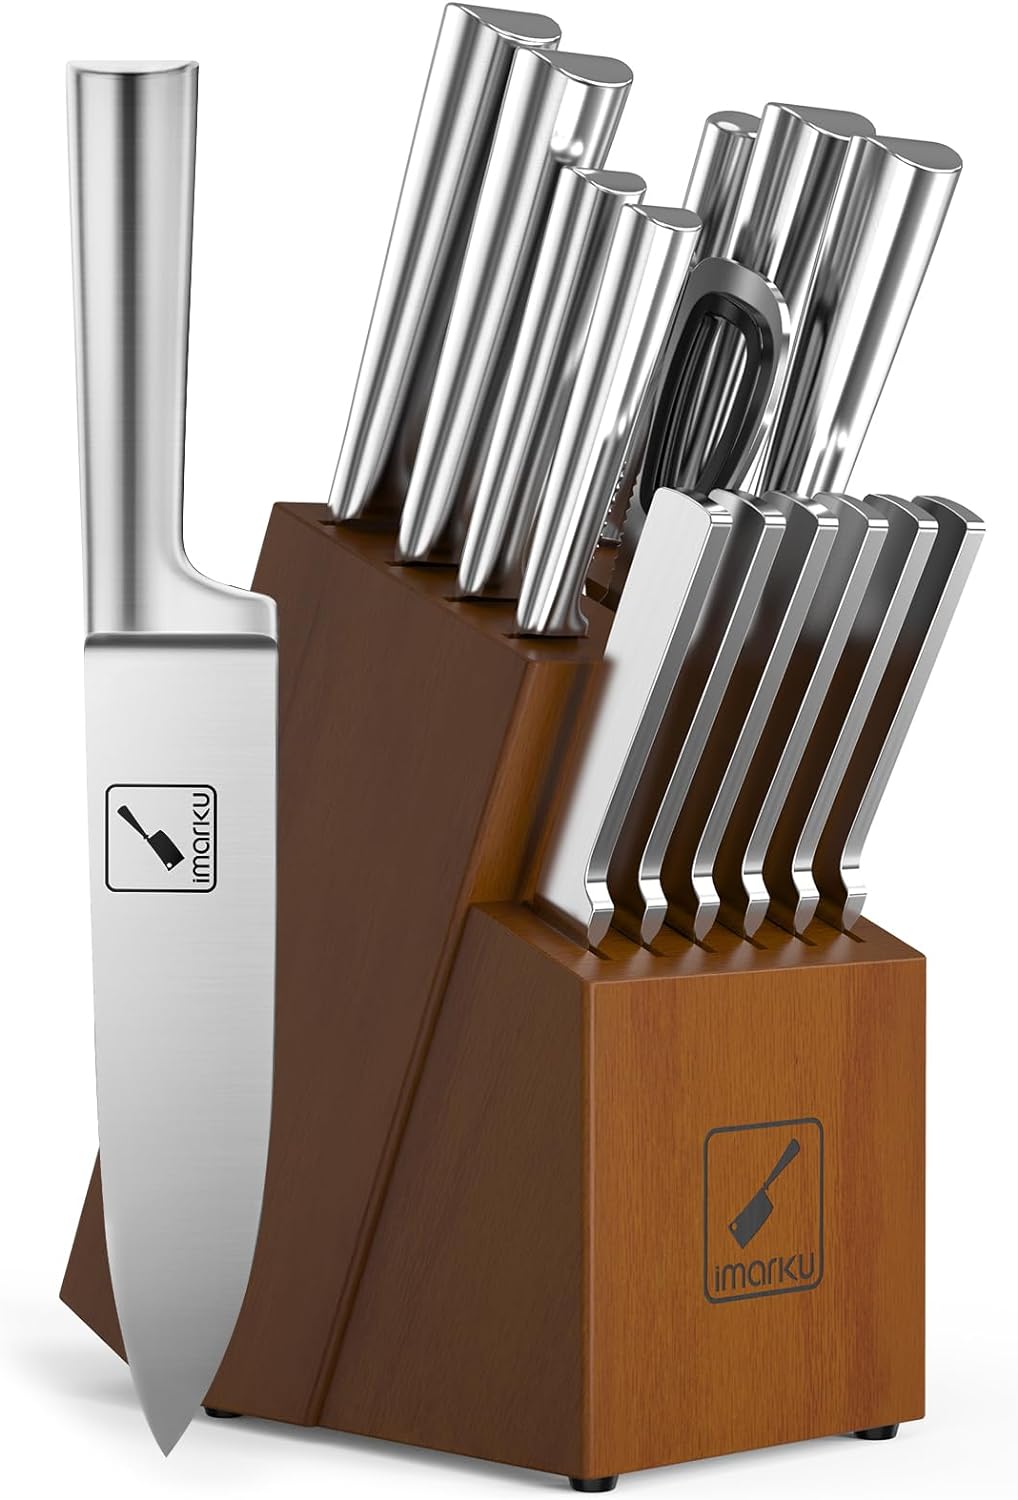 BRODARK Kitchen Knife Set with Block, Ultra Sharp 15 PcS german